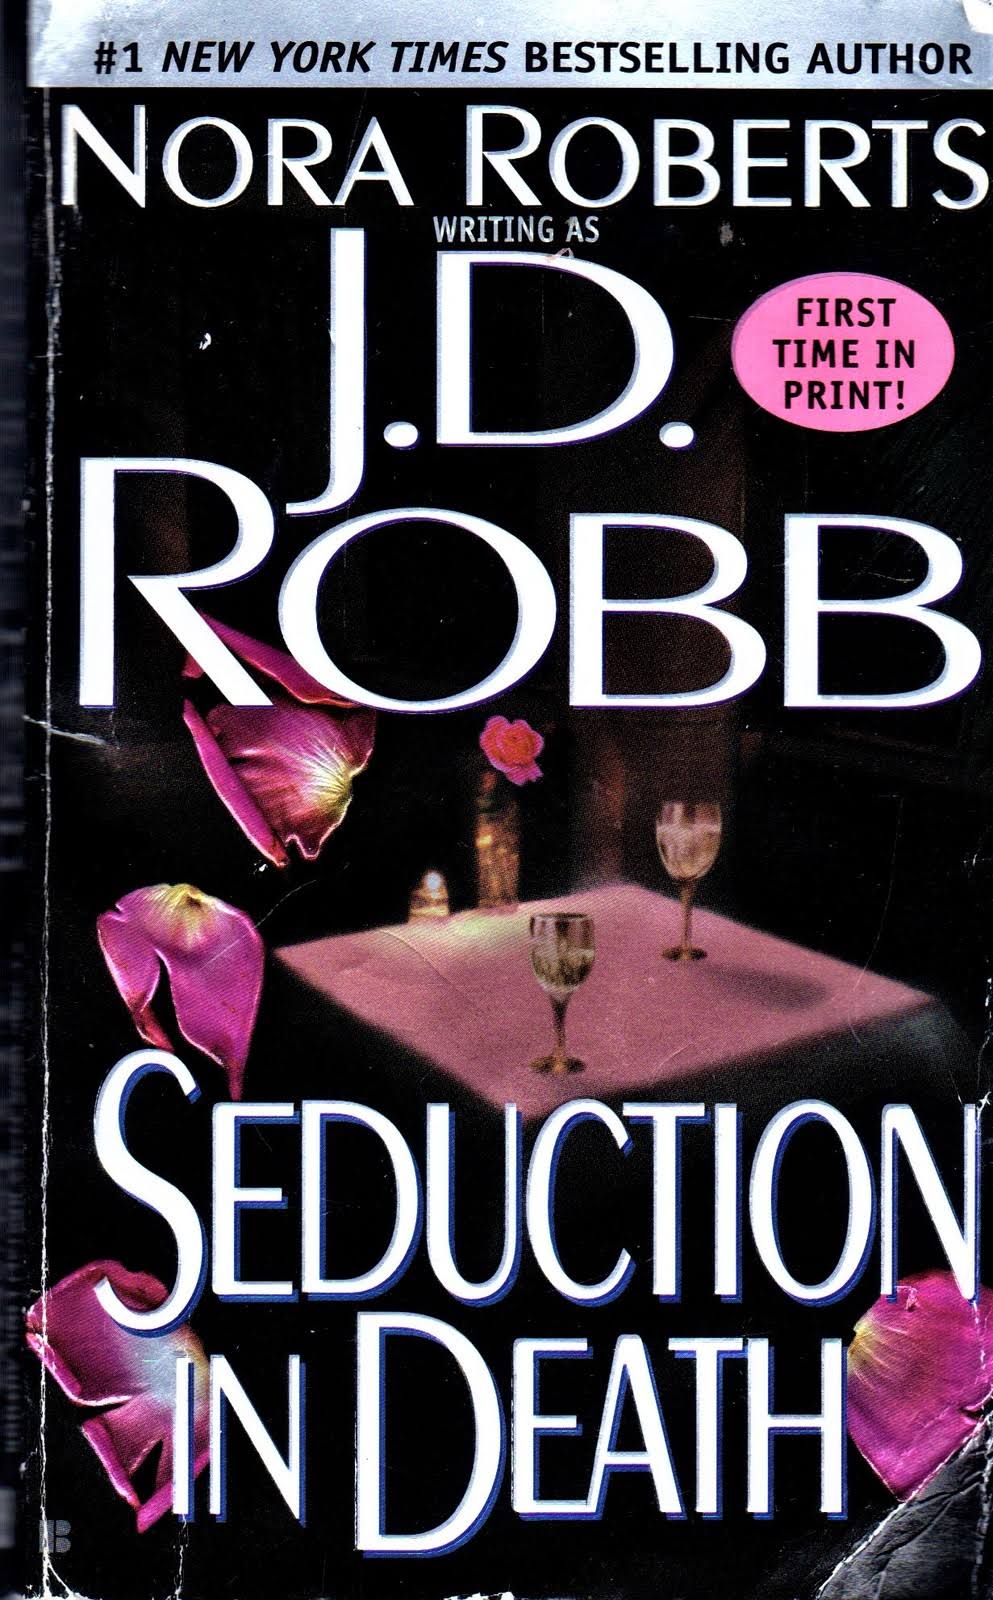 Seduction In Death - J. D. Robb